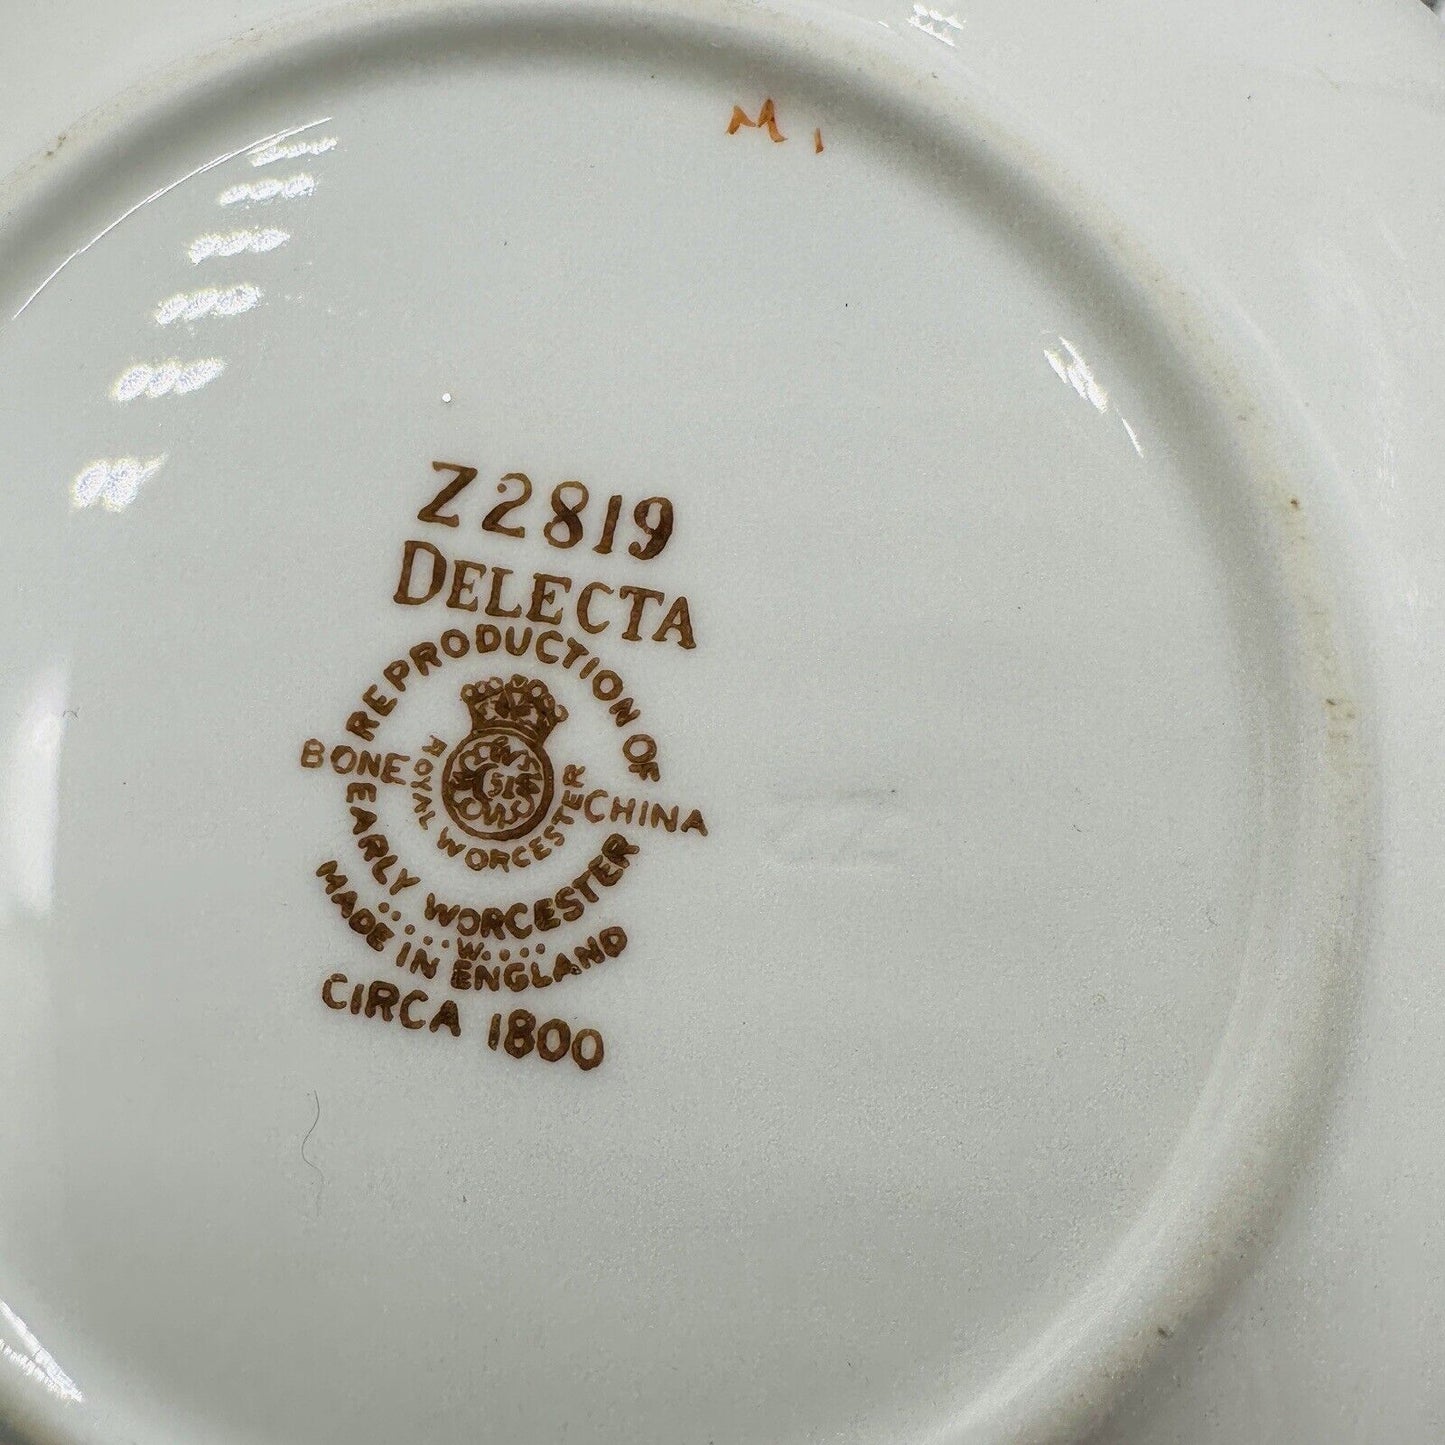 Royal Early Worcester Porcelain Delecta Z2819 Set Circa 1800 Saucer Lot 6 Piece